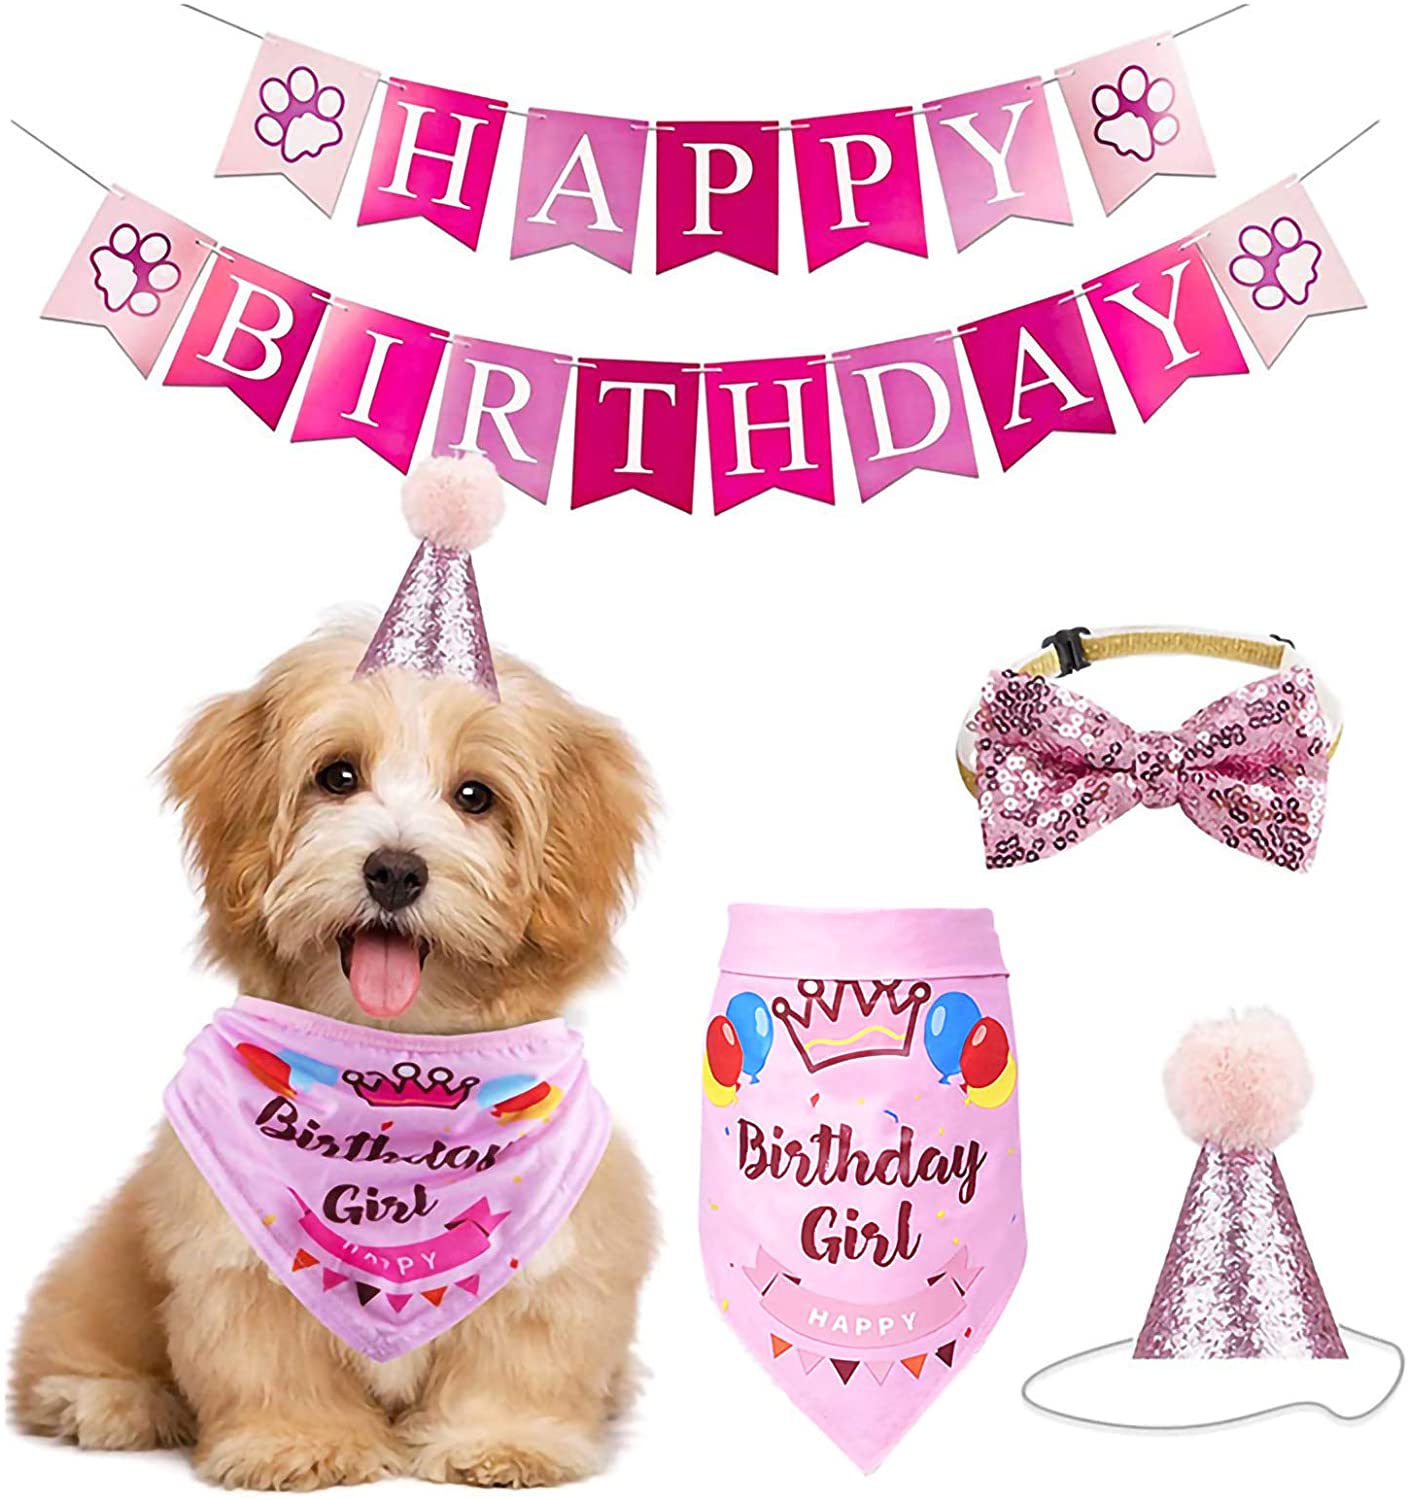 SCENEREAL Dog Birthday Boy Bandana Set Happy Birthday Dog Accessories Lovely Bandana and Cute Birthday Hat for Dog Birthday Party Wearing 